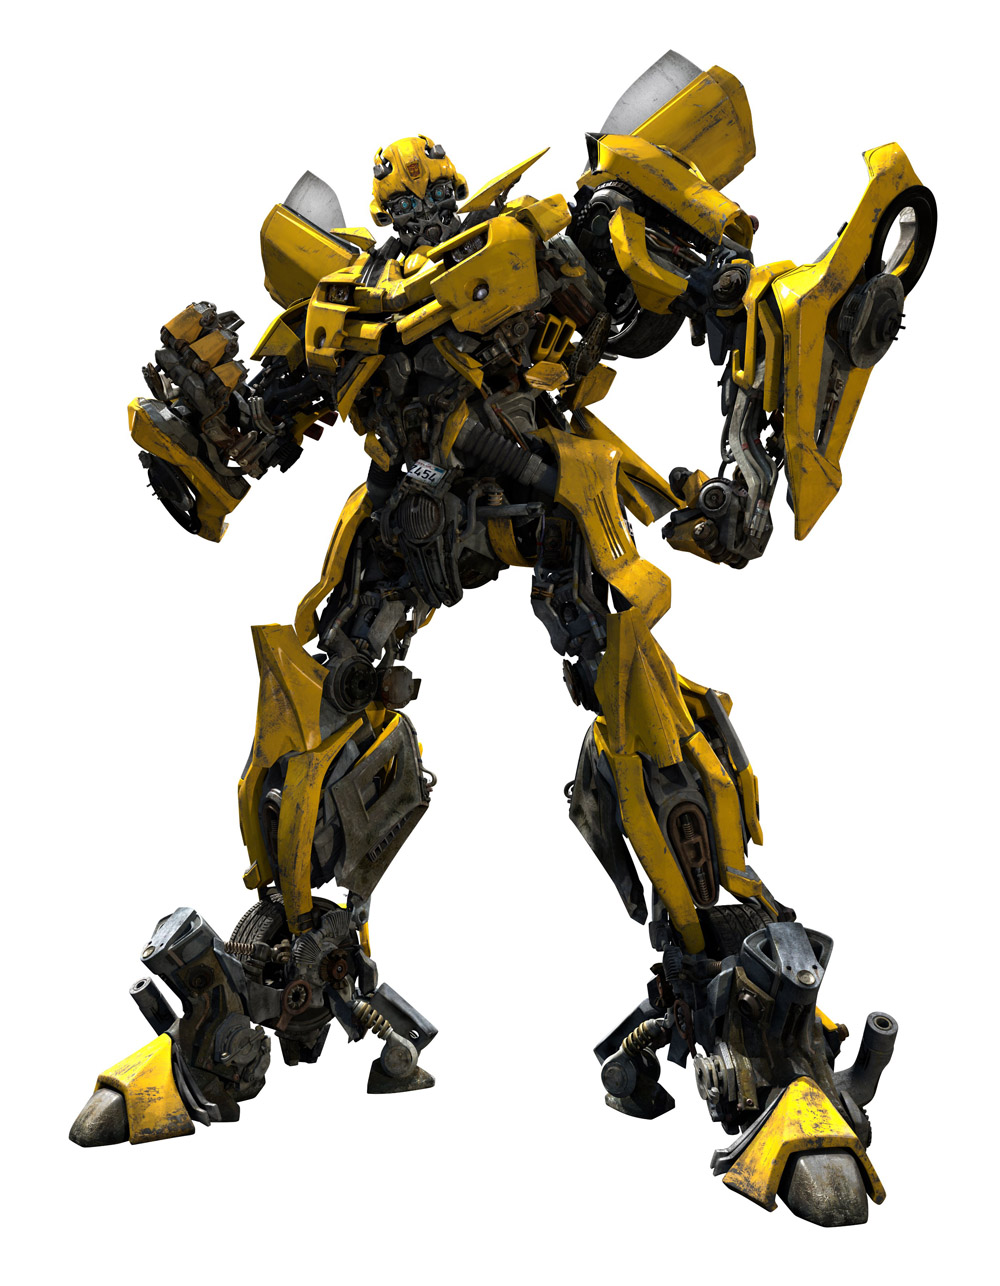 Bumblebee - The Transformers Photo (36906761) - Fanpop